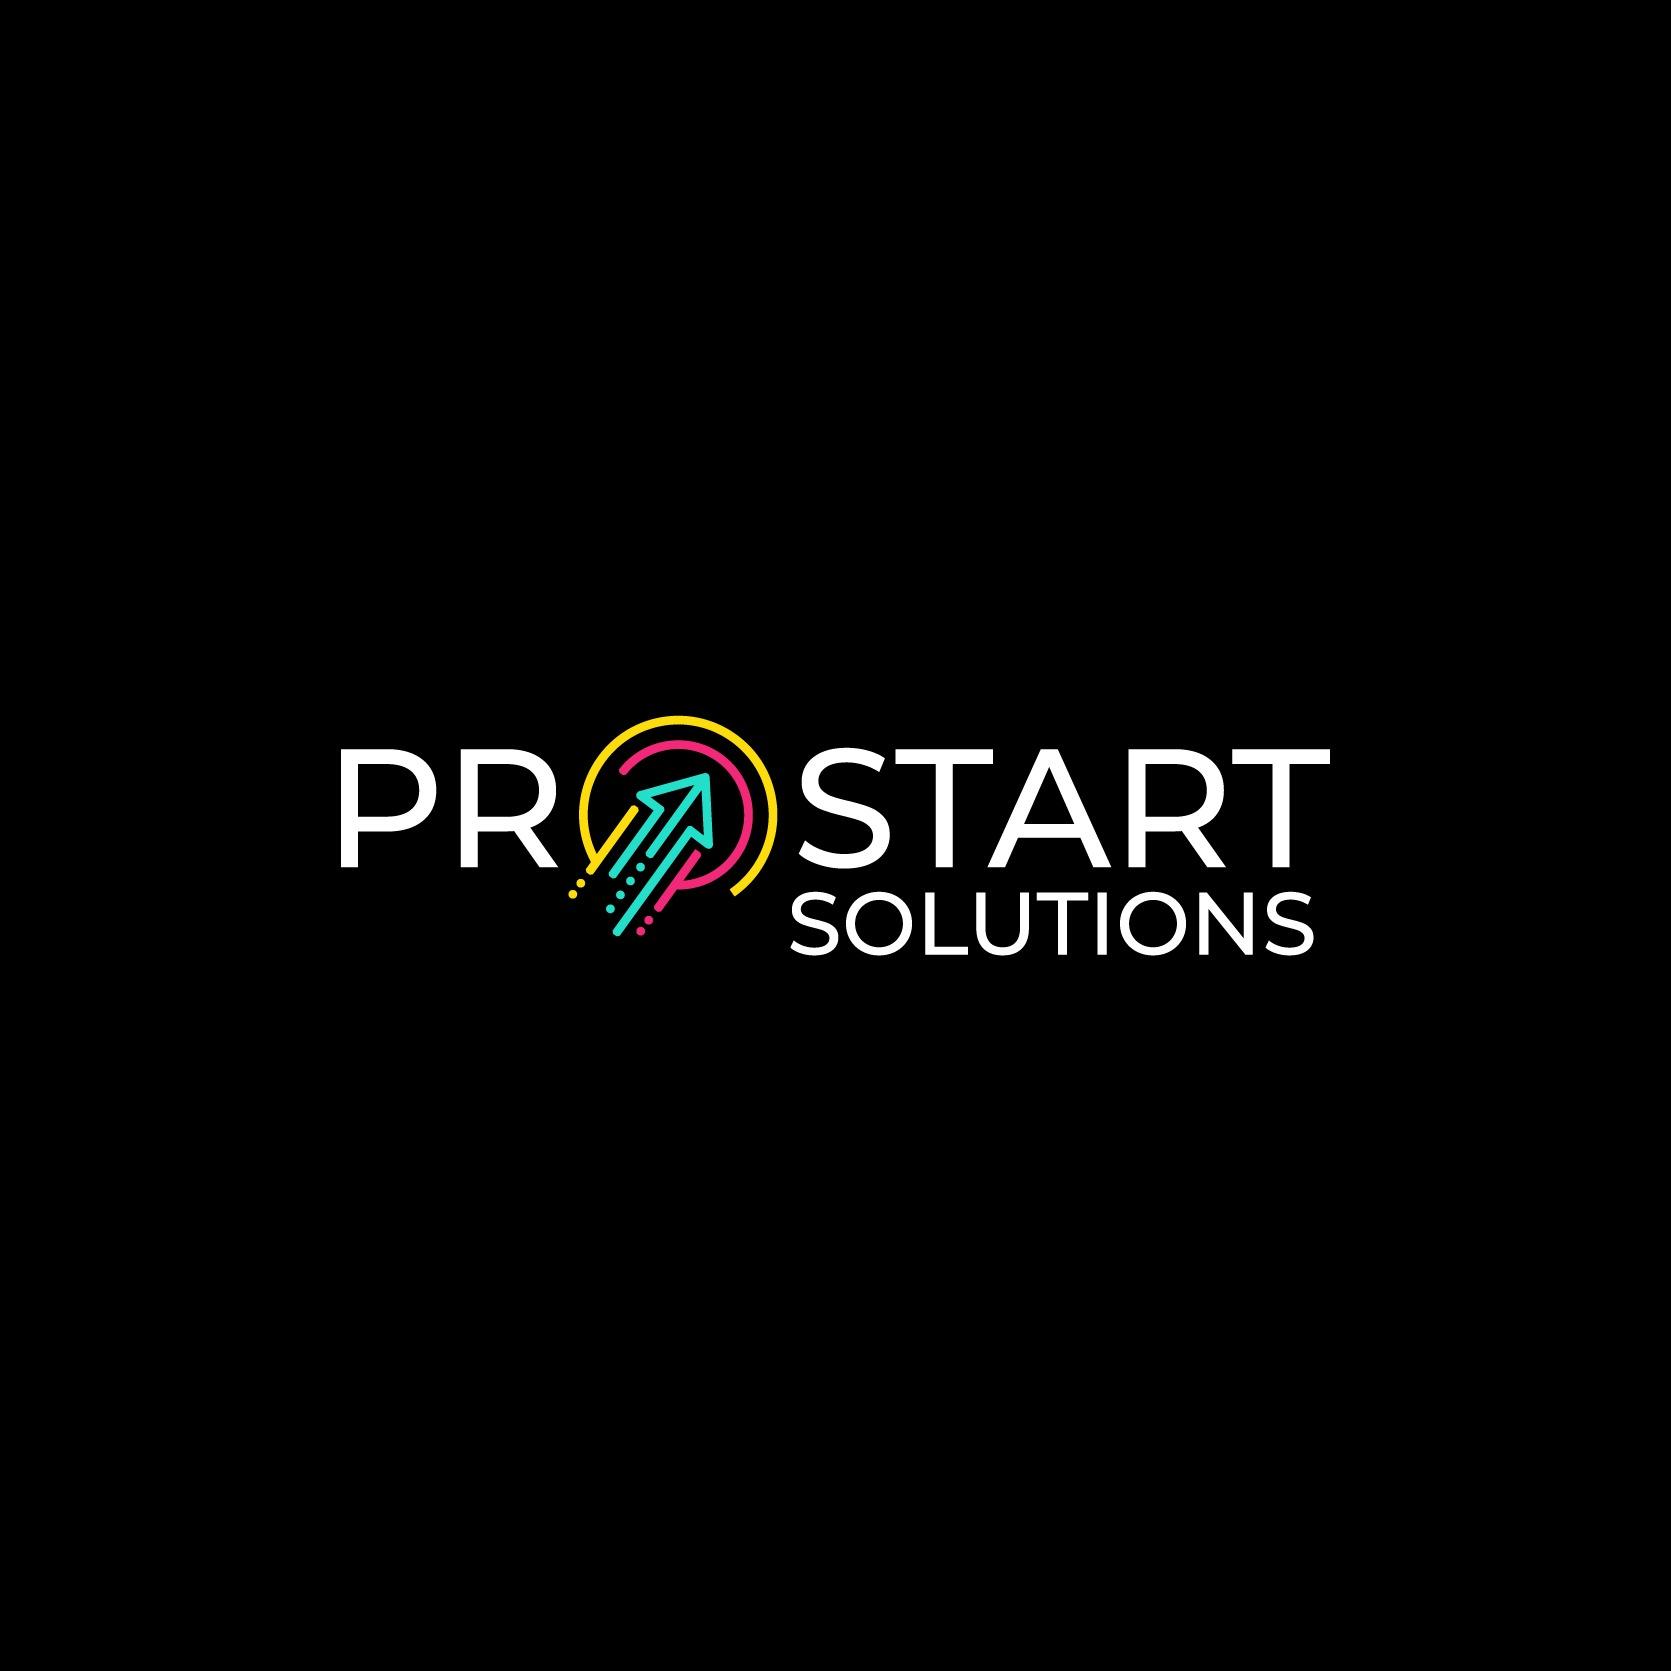 ProStart Solutions - Galax, VA 24333 - (276)237-1019 | ShowMeLocal.com